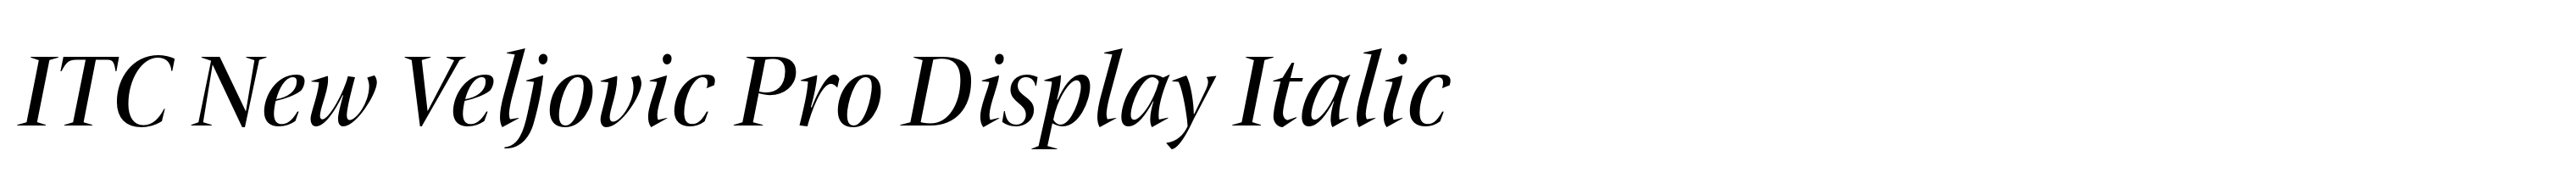 ITC New Veljovic Pro Display Italic